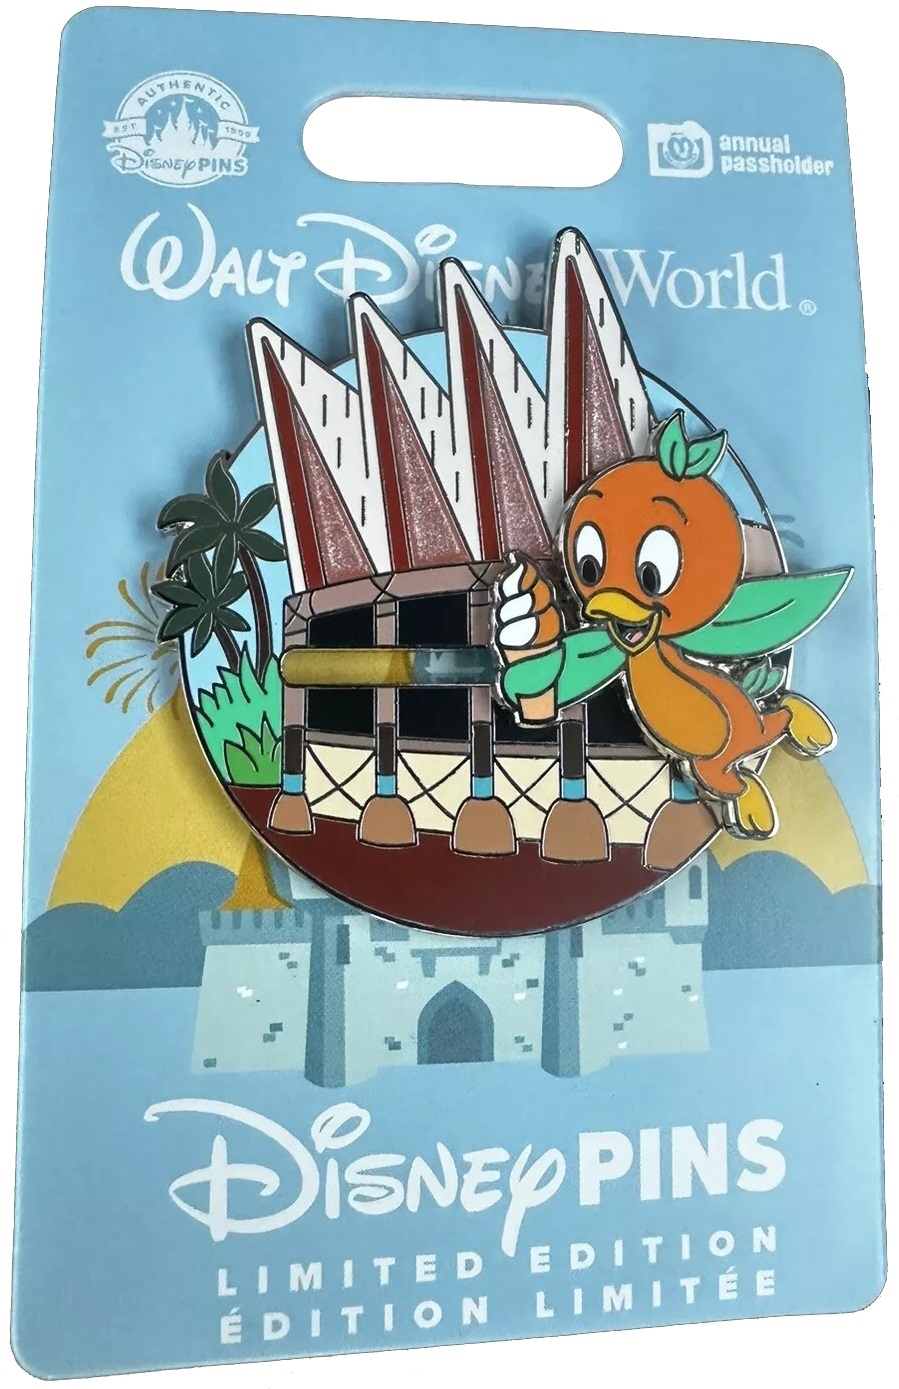 Walt Disney World Orange Bird Annual Passholder Exclusive Pin